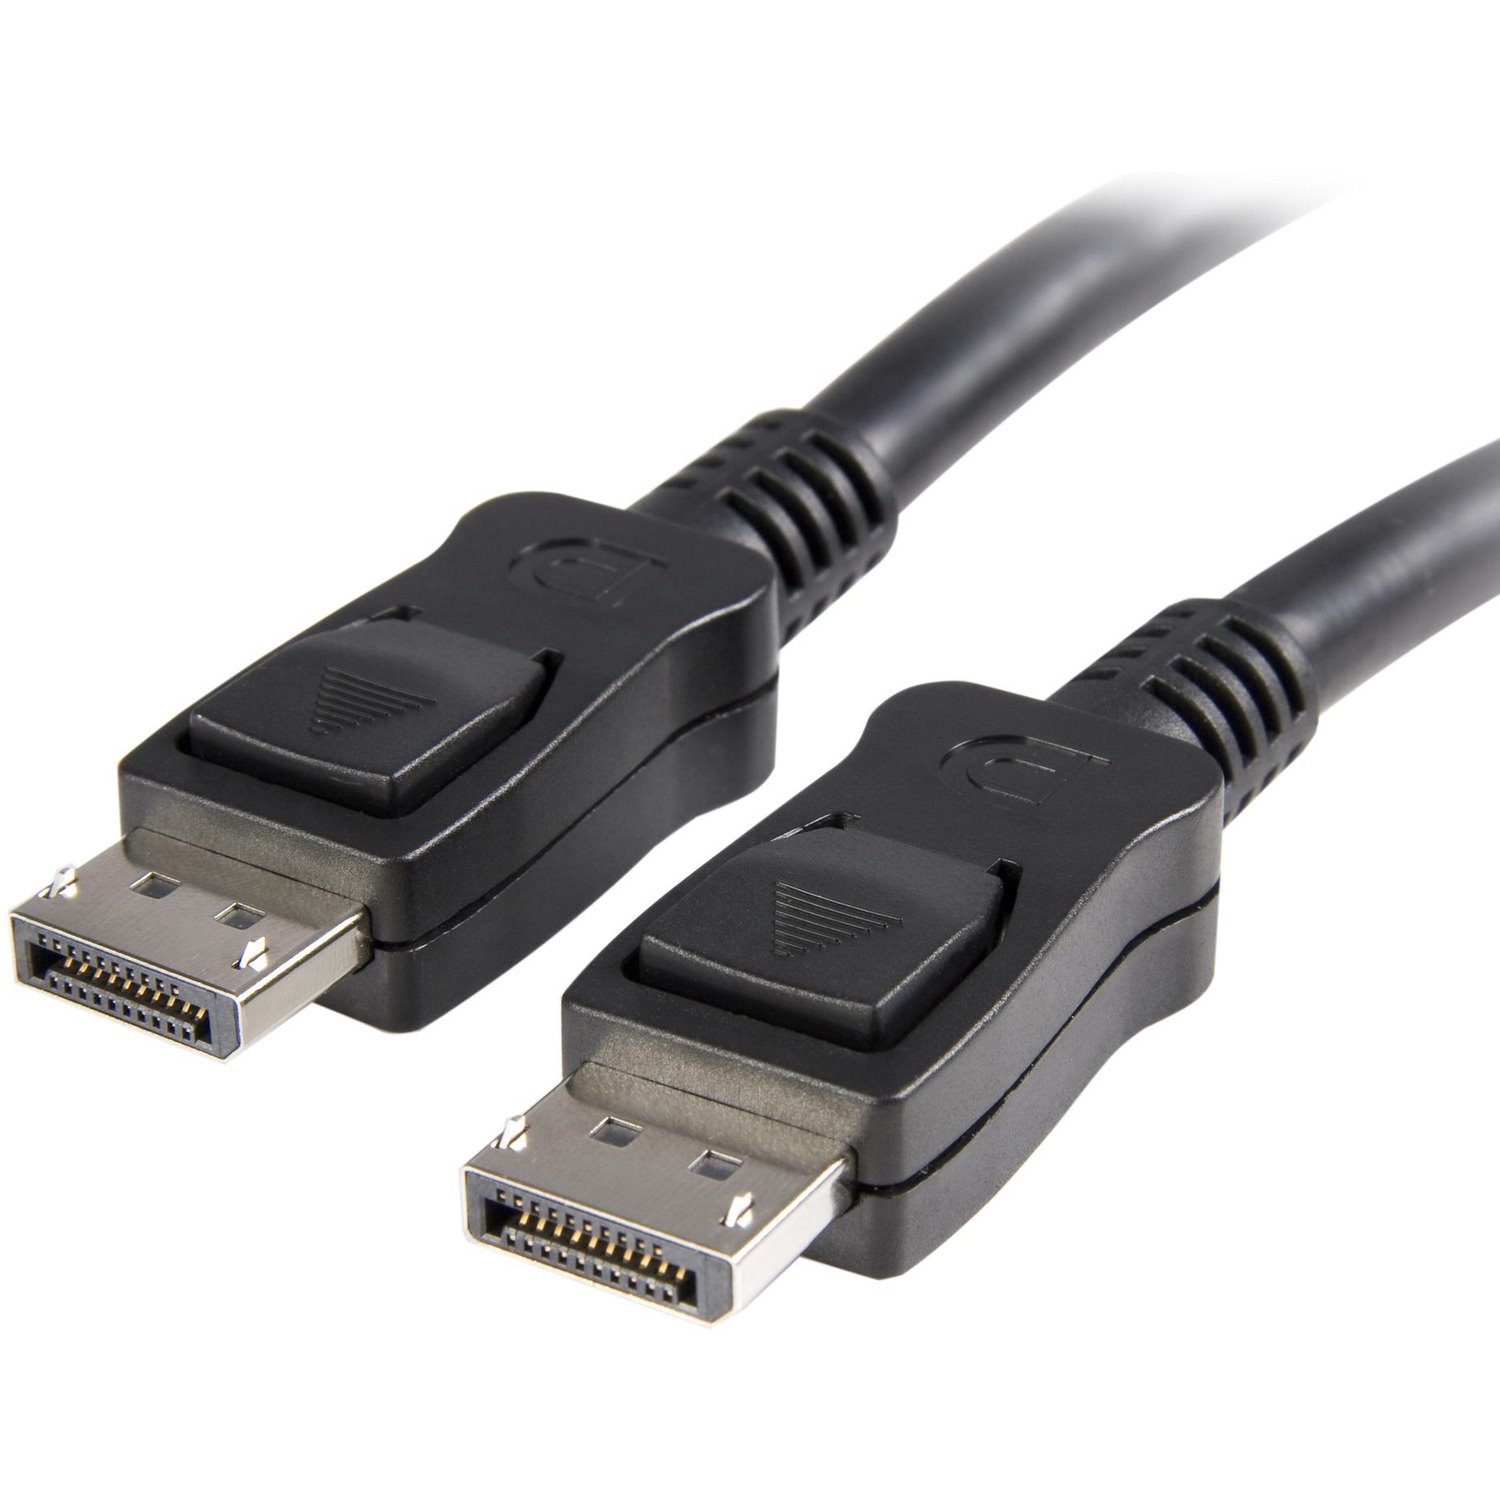 StarTech.com 1m DisplayPort 1.2 Cable with Latches M/M - DisplayPort 4k